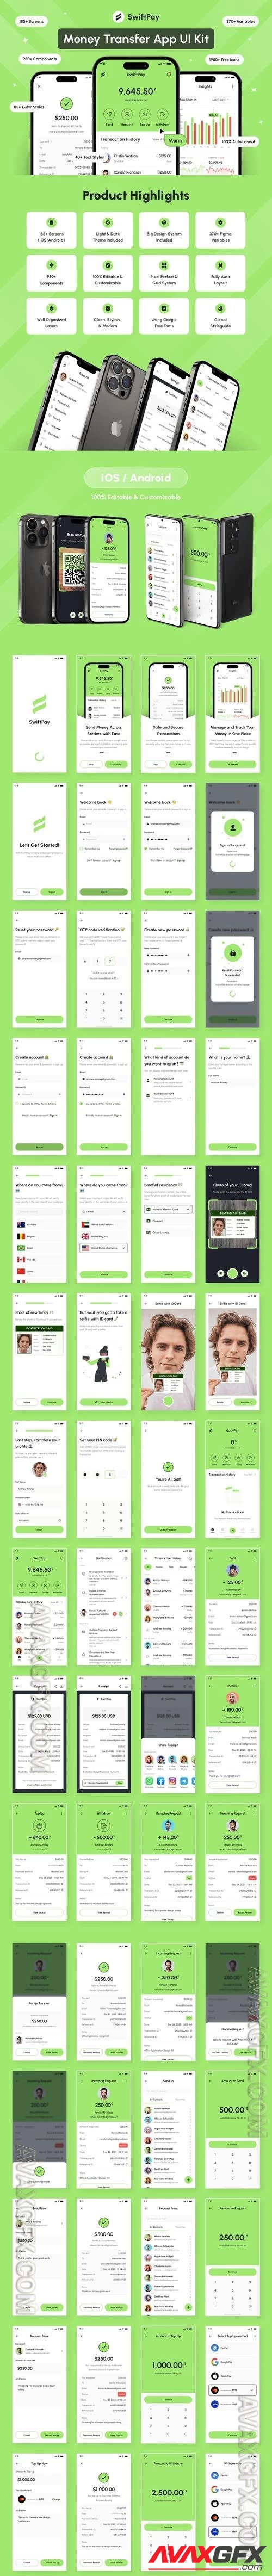 SwiftPay - Money Transfer App UI Kit - UI8